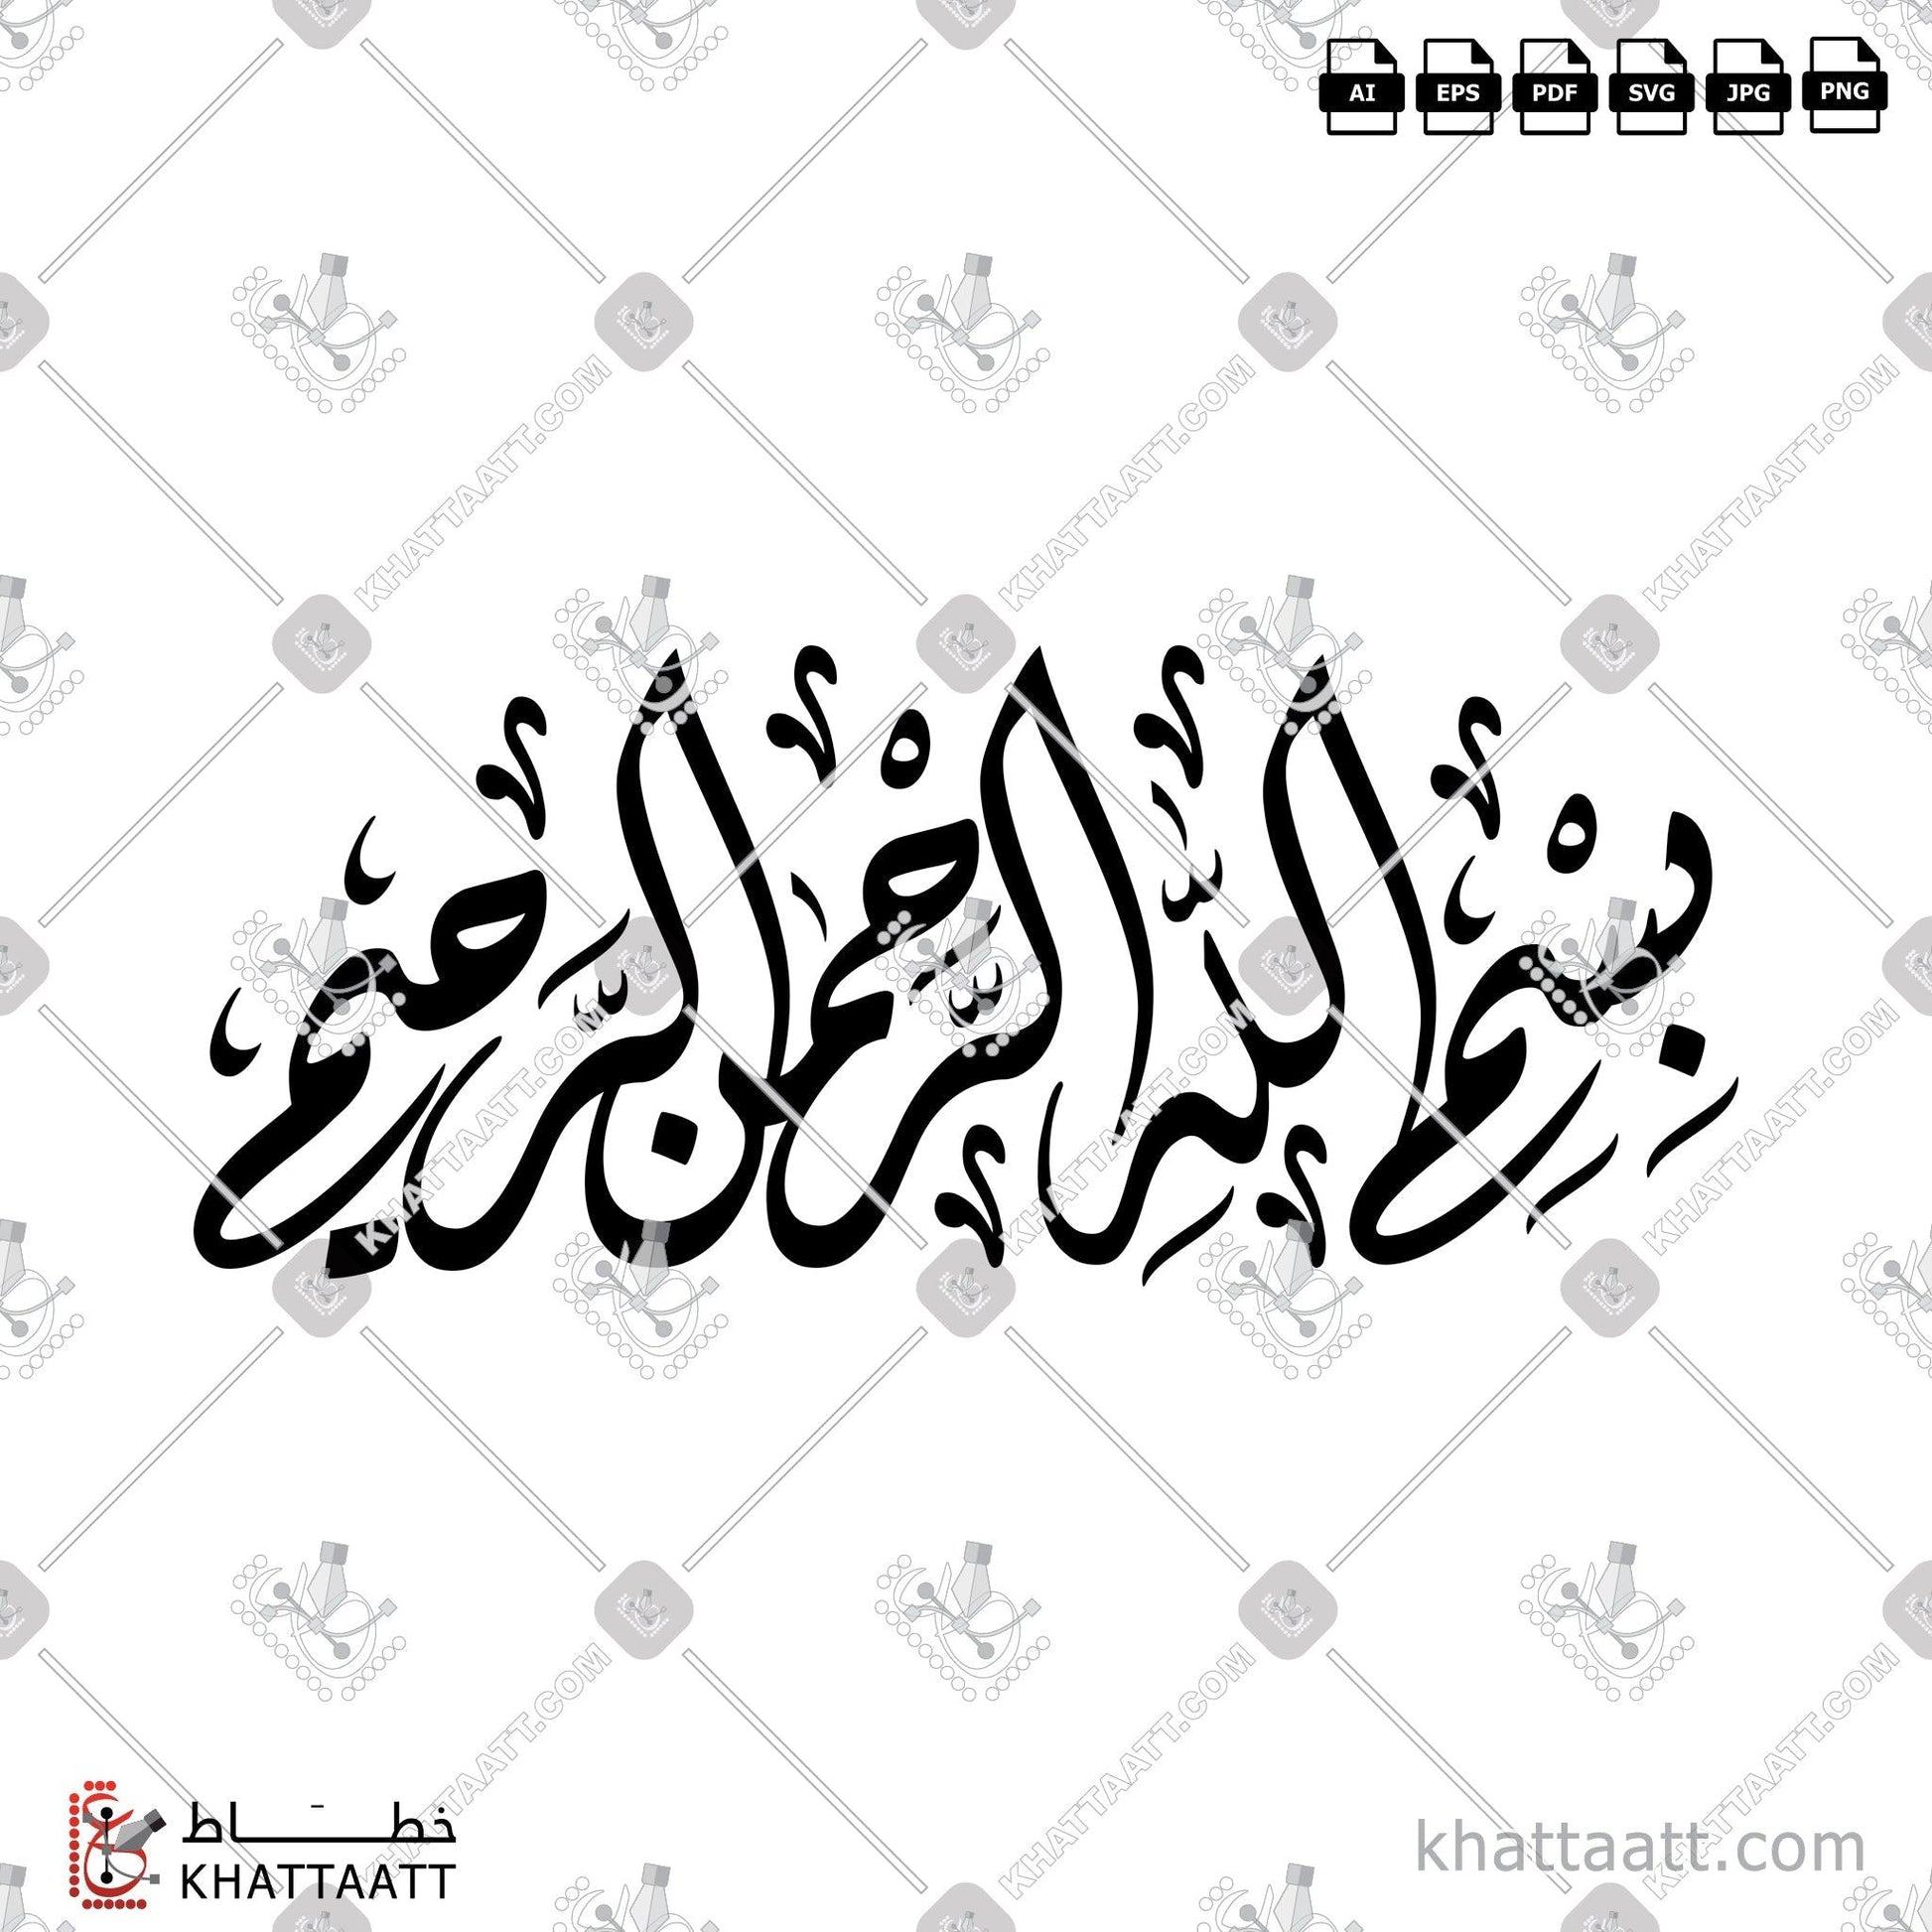 Download Arabic Calligraphy of بسم الله الرحمن الرحيم in Diwani - الخط الديواني in vector and .png